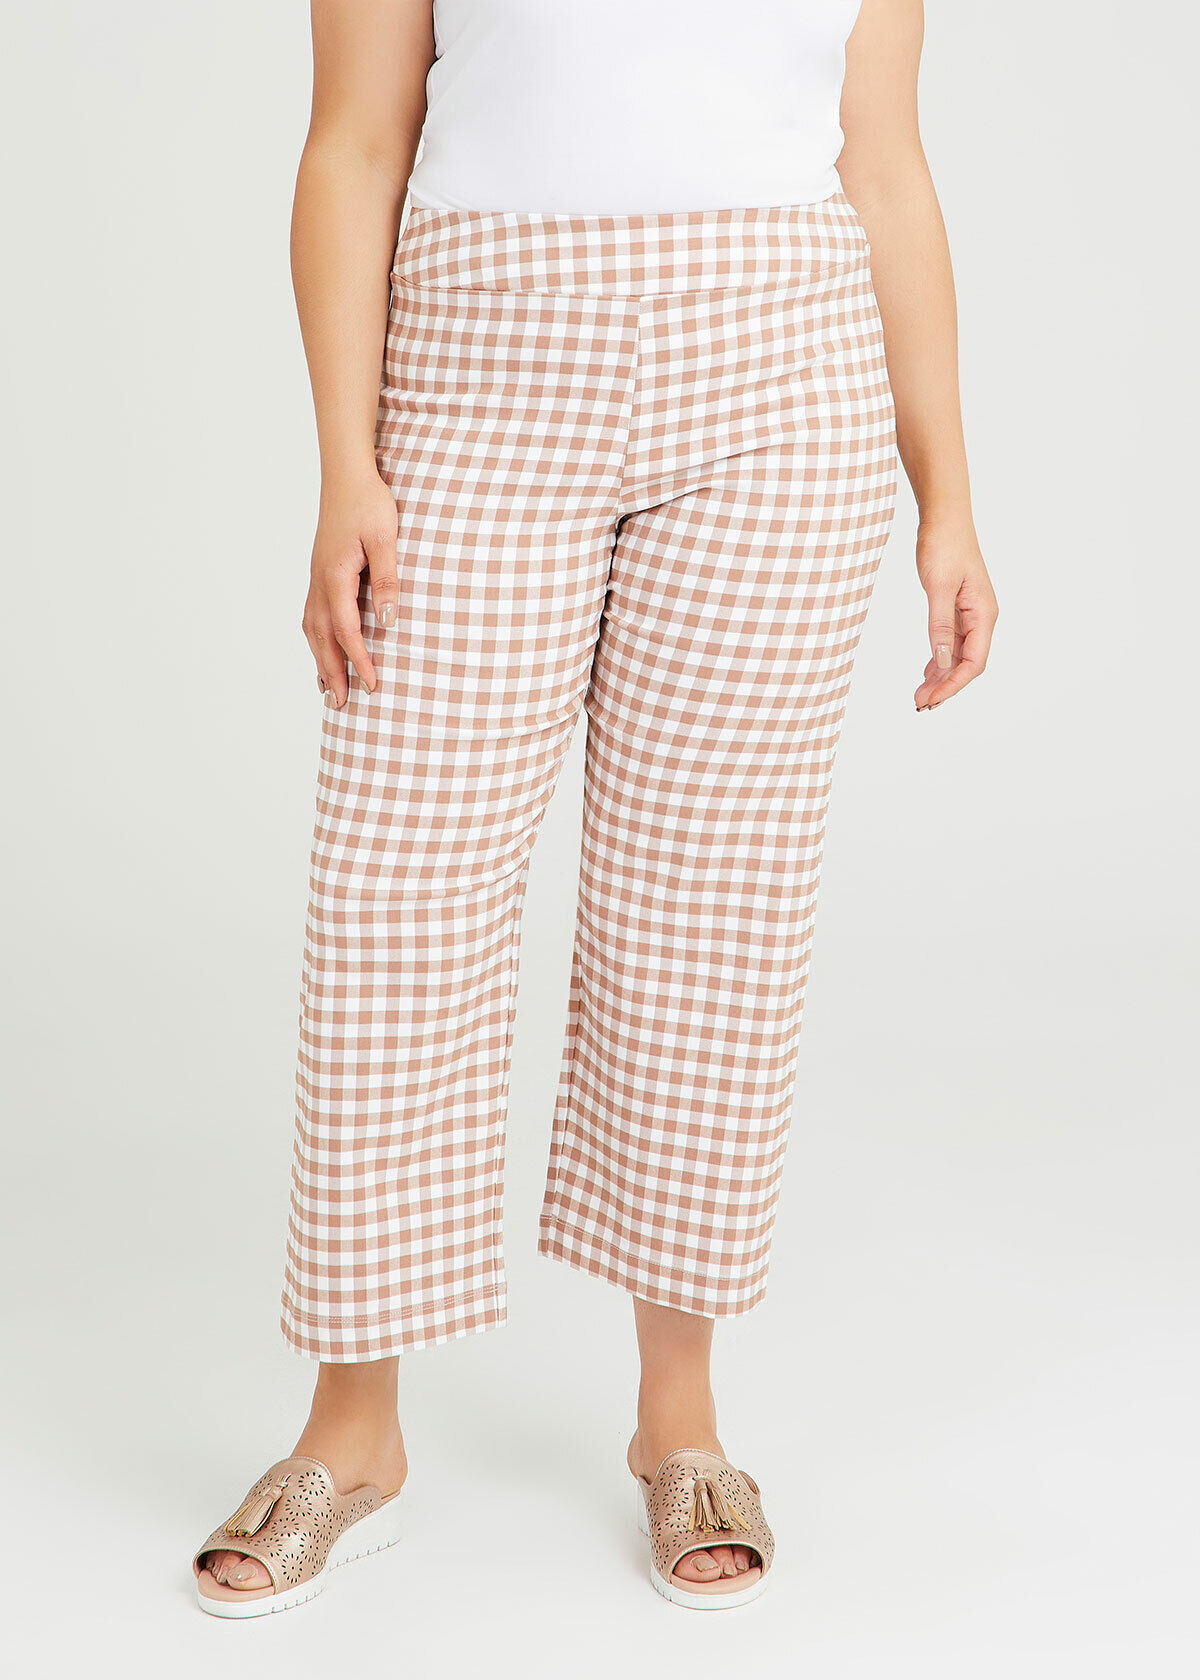 ZEFOTIM Women Plus Size Print Loose Casual Elastic Pants Cropped Full Length Trousers 